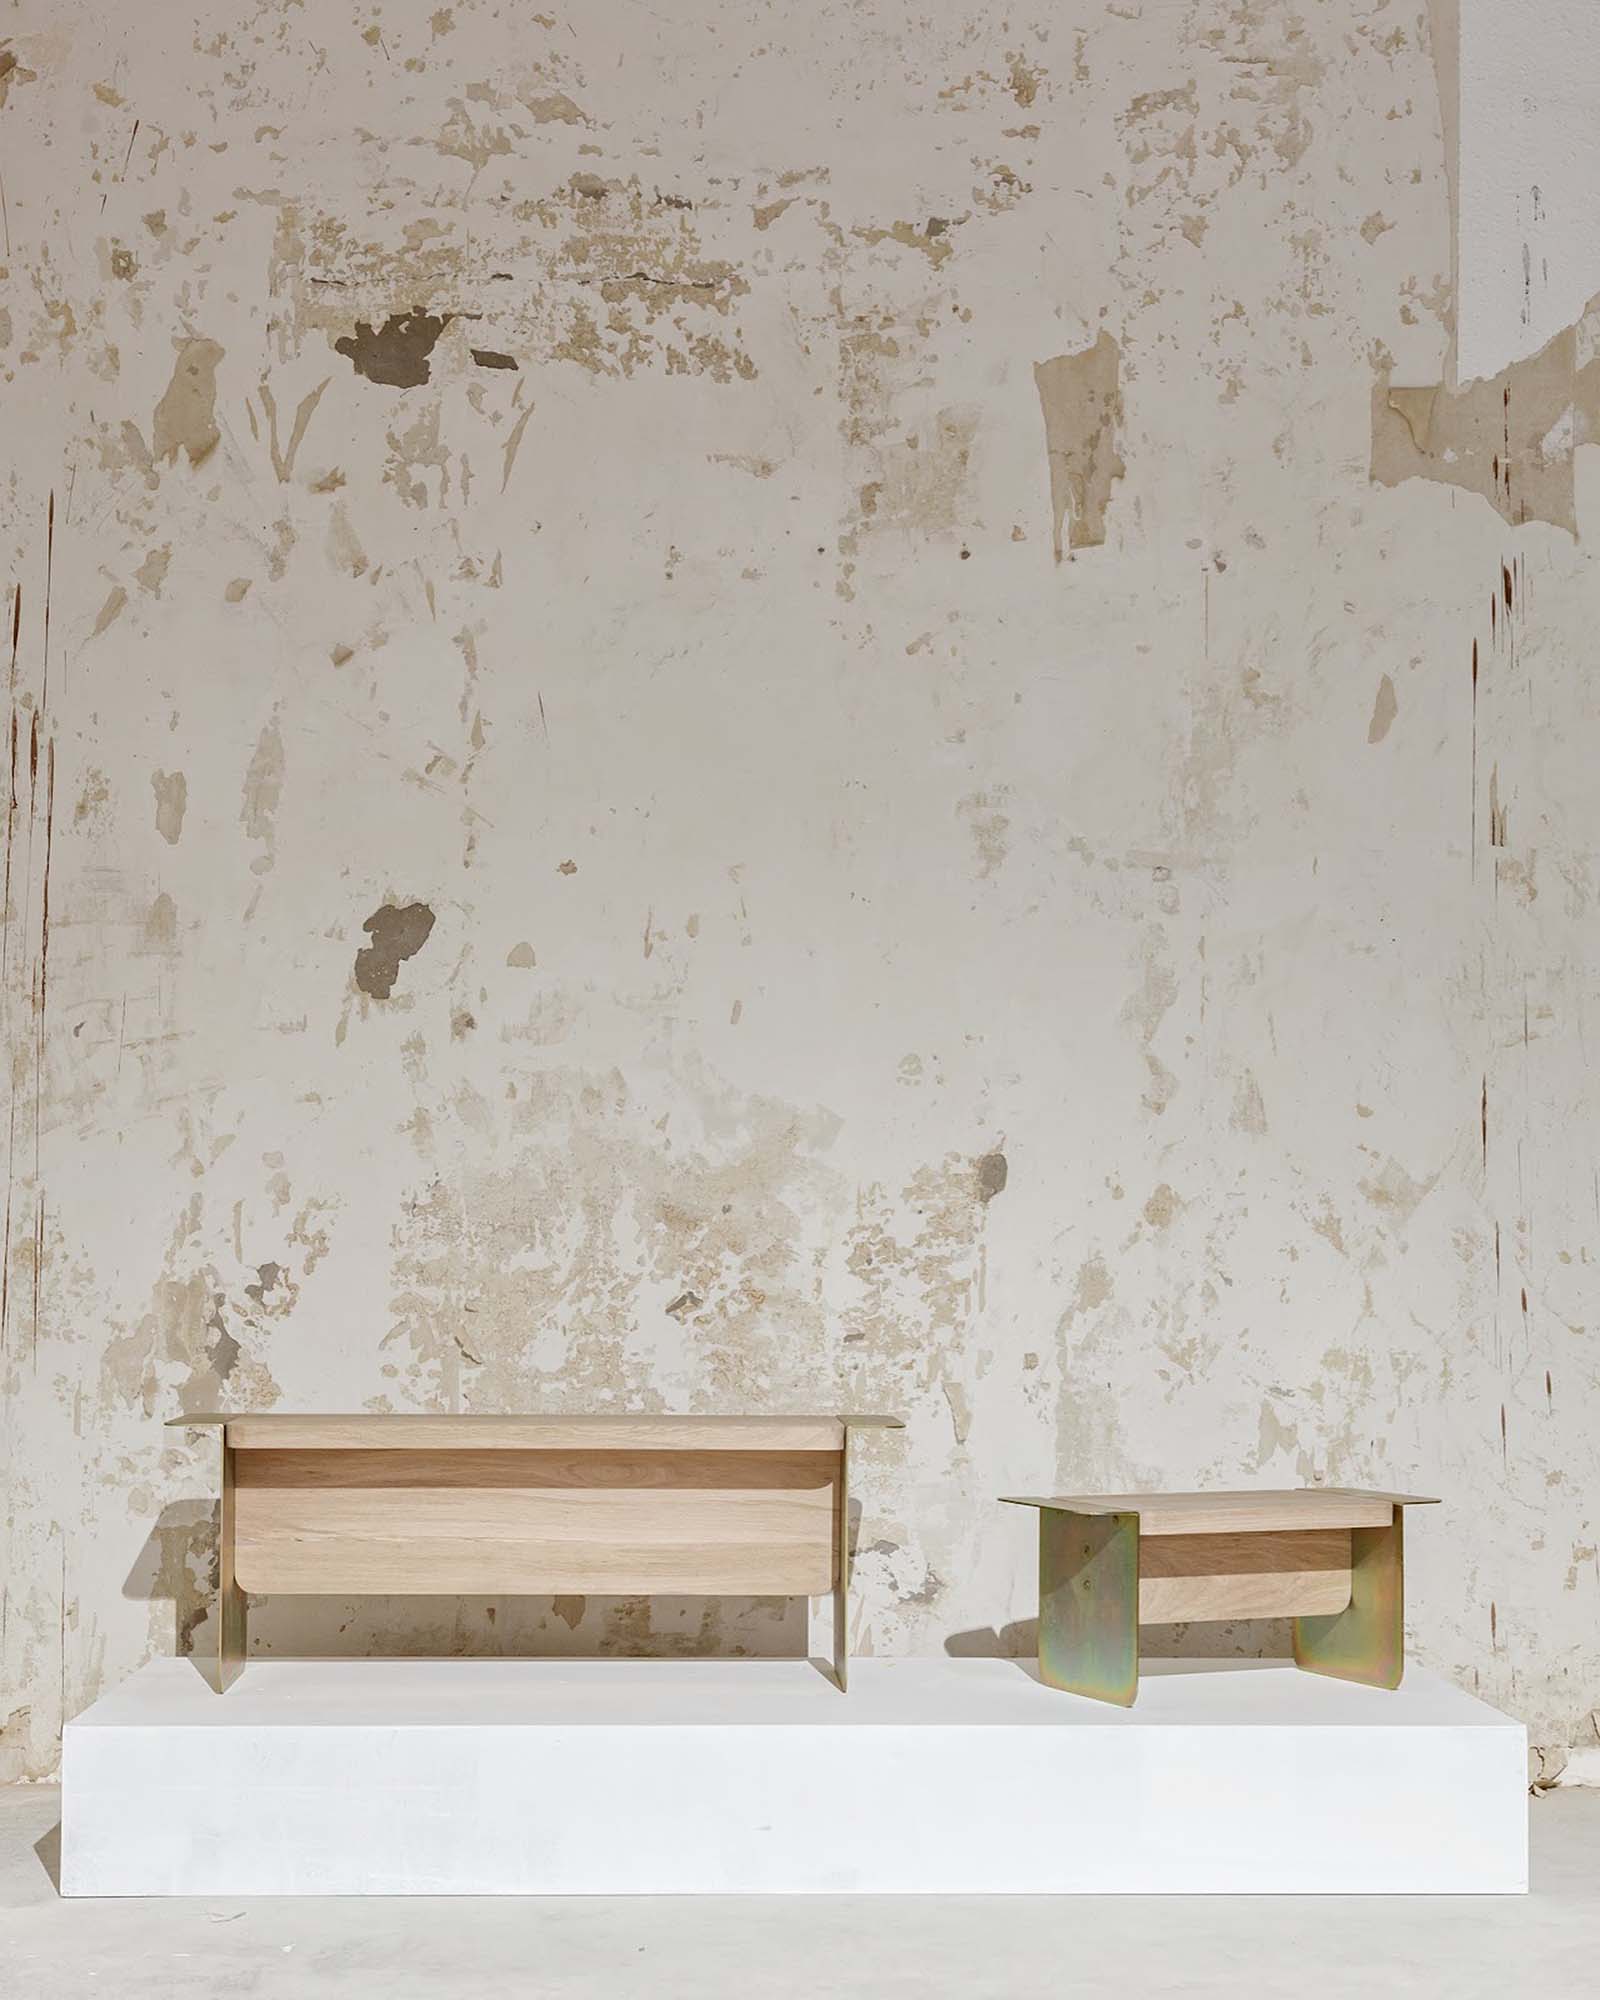 Midas collection (bench, stool)